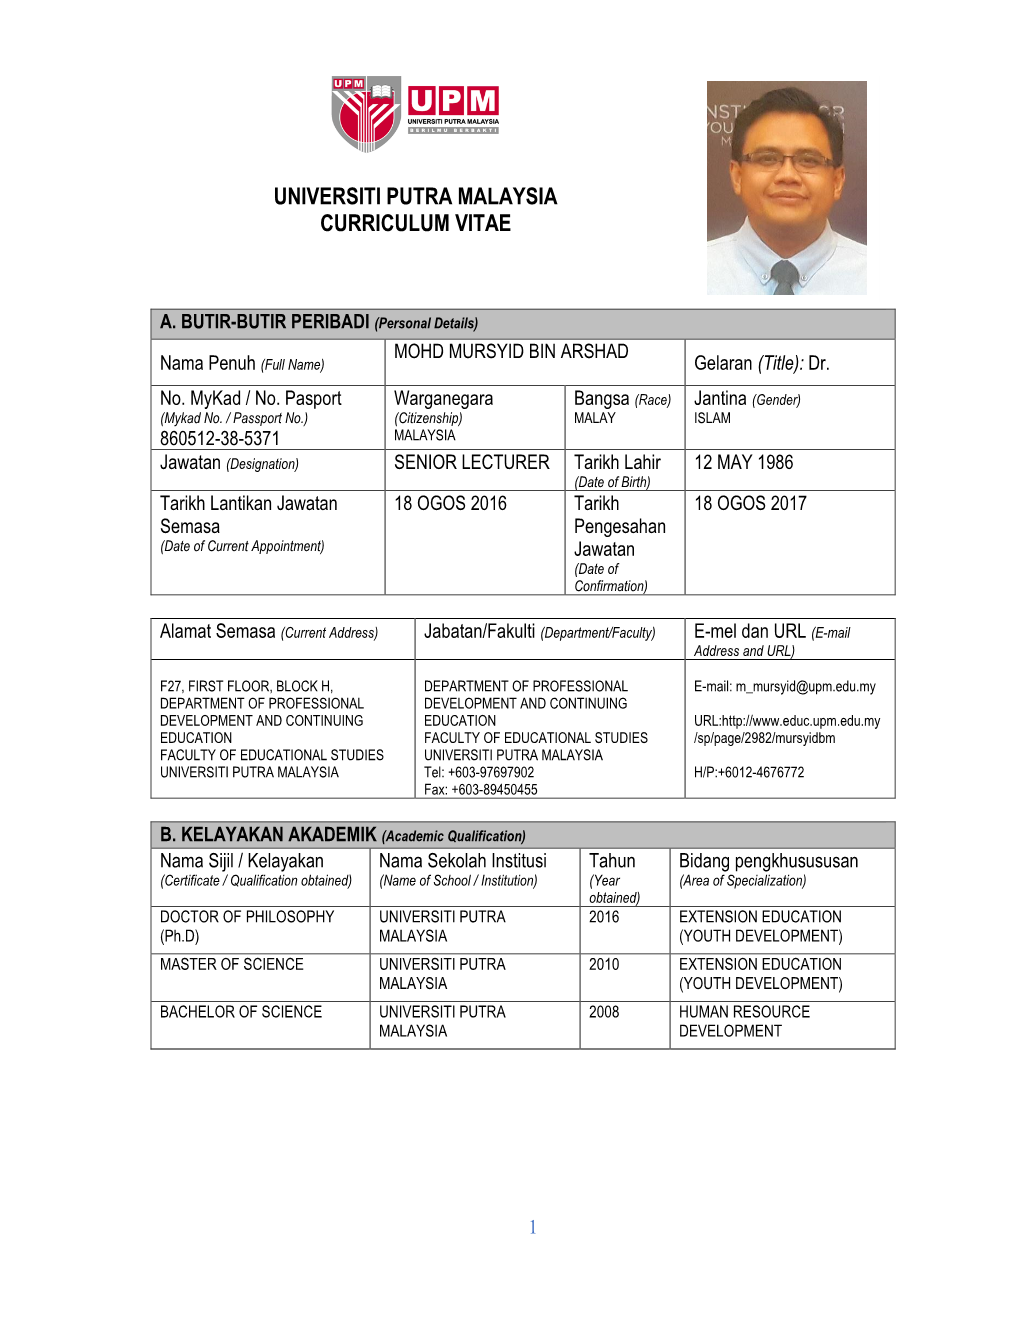 Universiti Putra Malaysia Curriculum Vitae